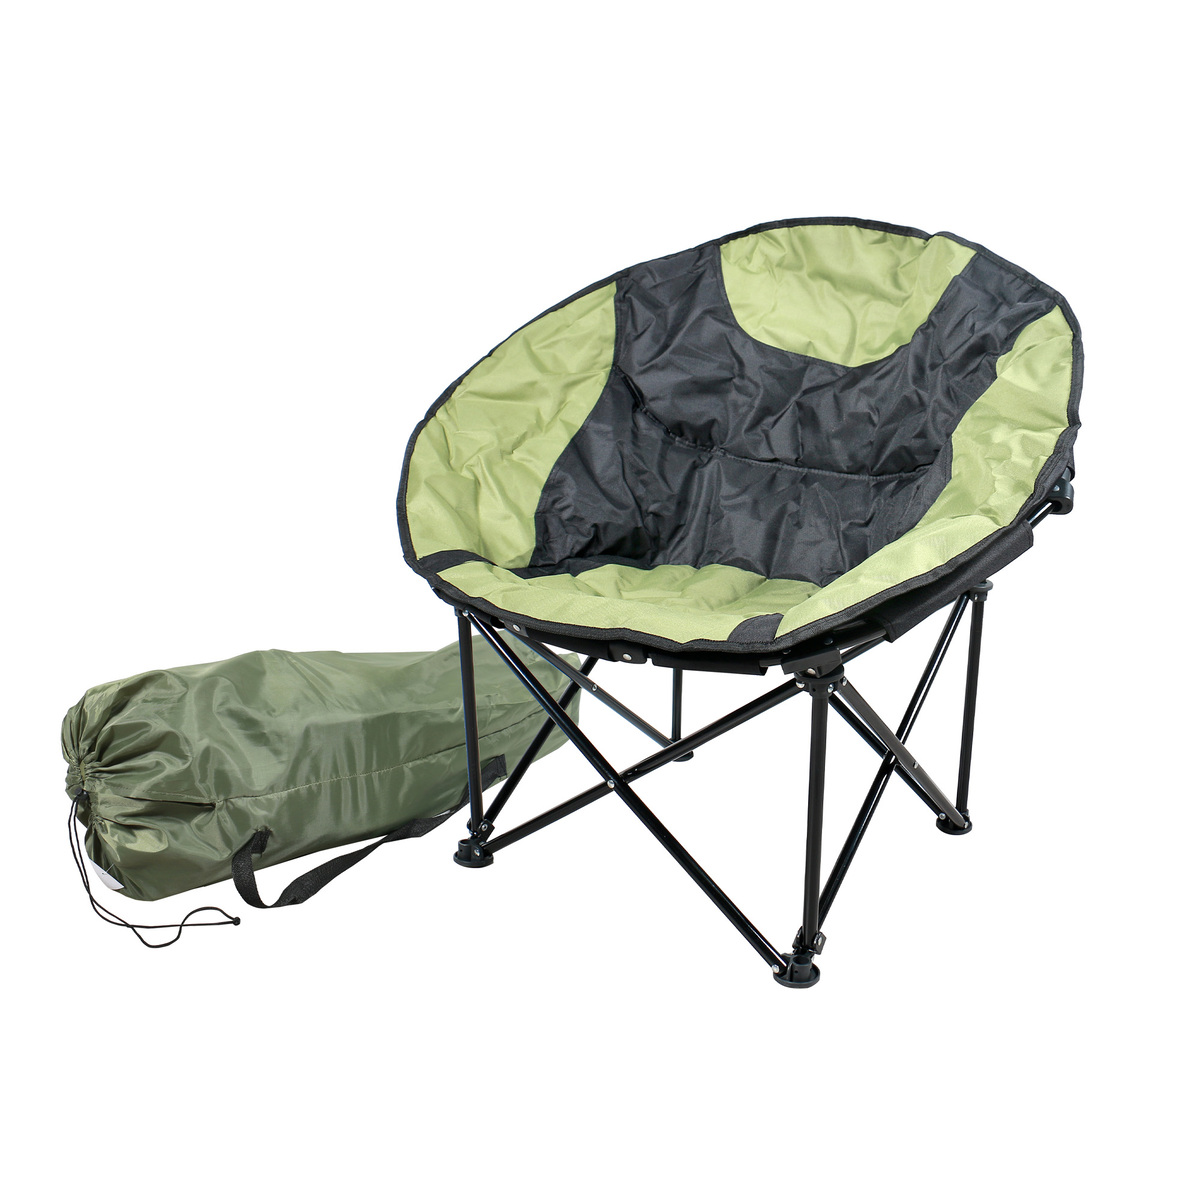 Campmate Foldable Moon Chair, Green/Black, CM1832